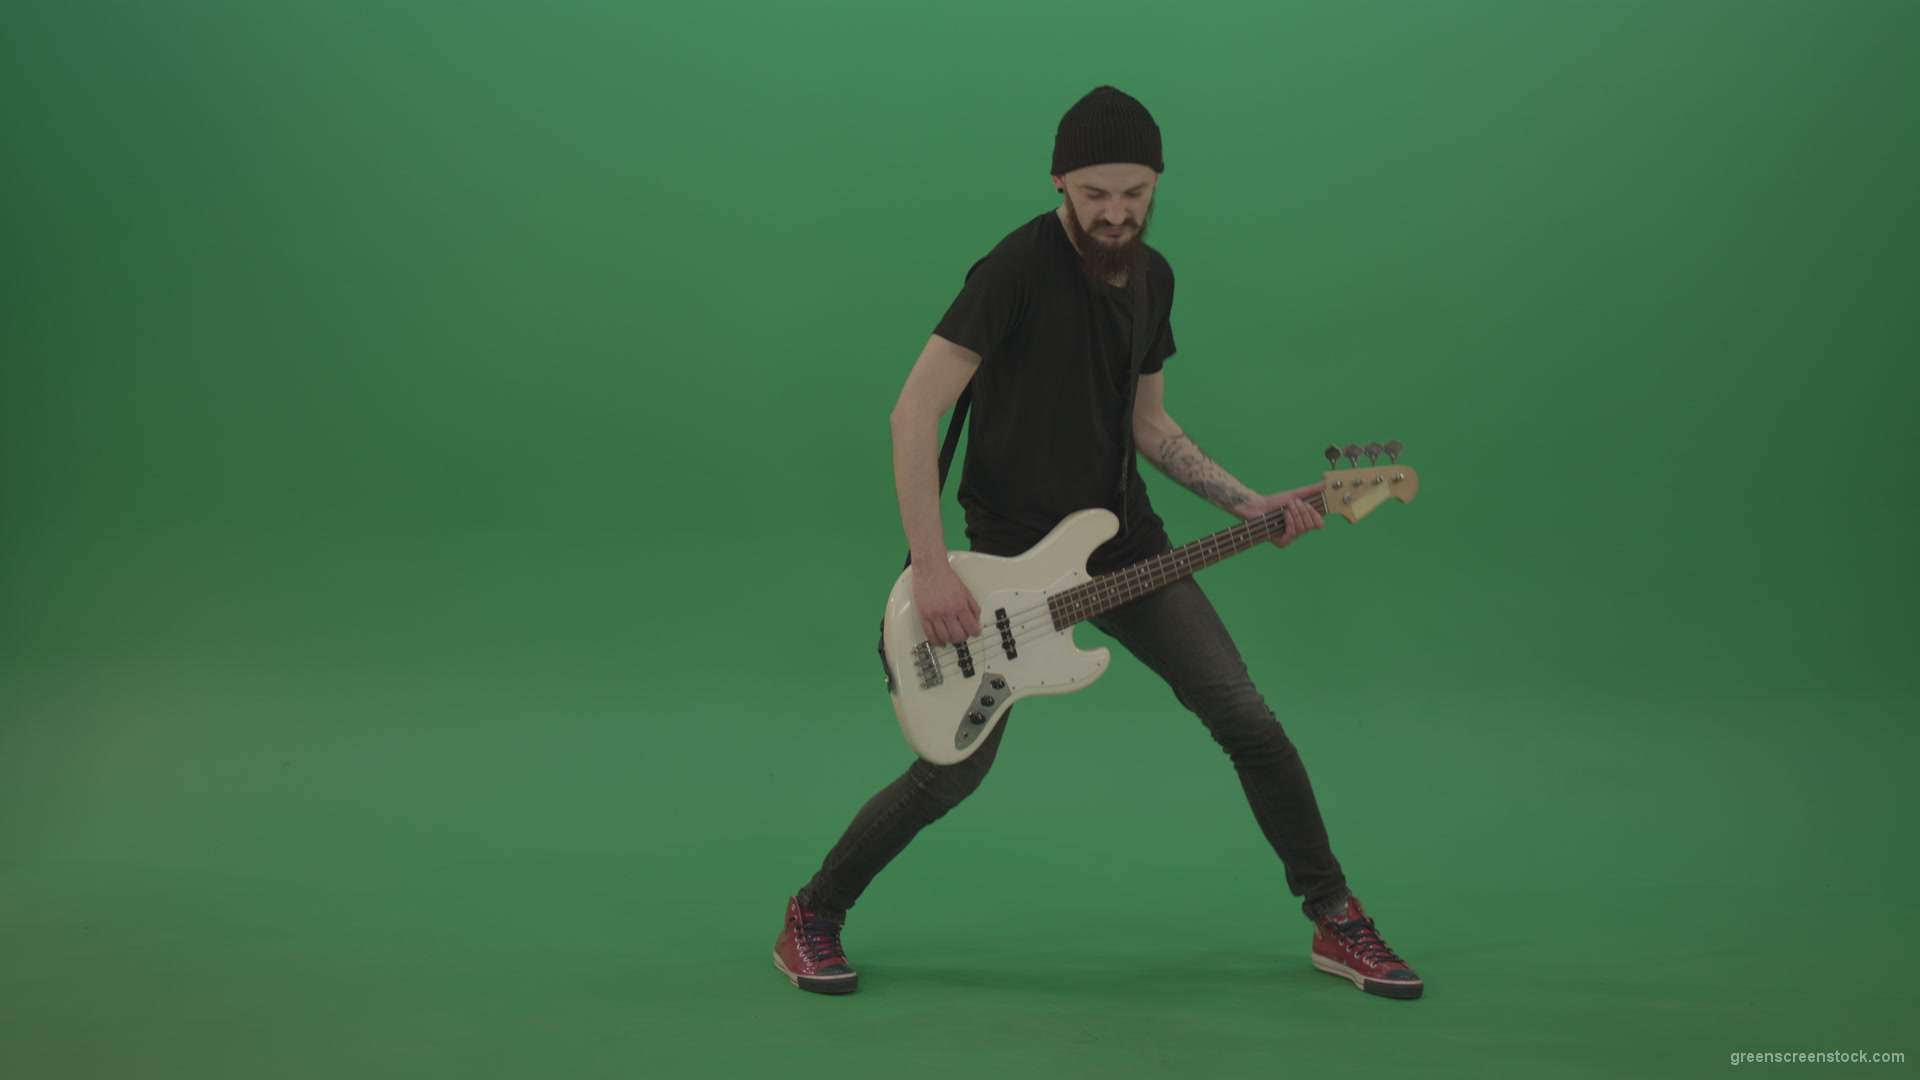 Young-man-with-beard-in-black-shirt-play-white-bass-guitar-on-green-screen_001 Green Screen Stock